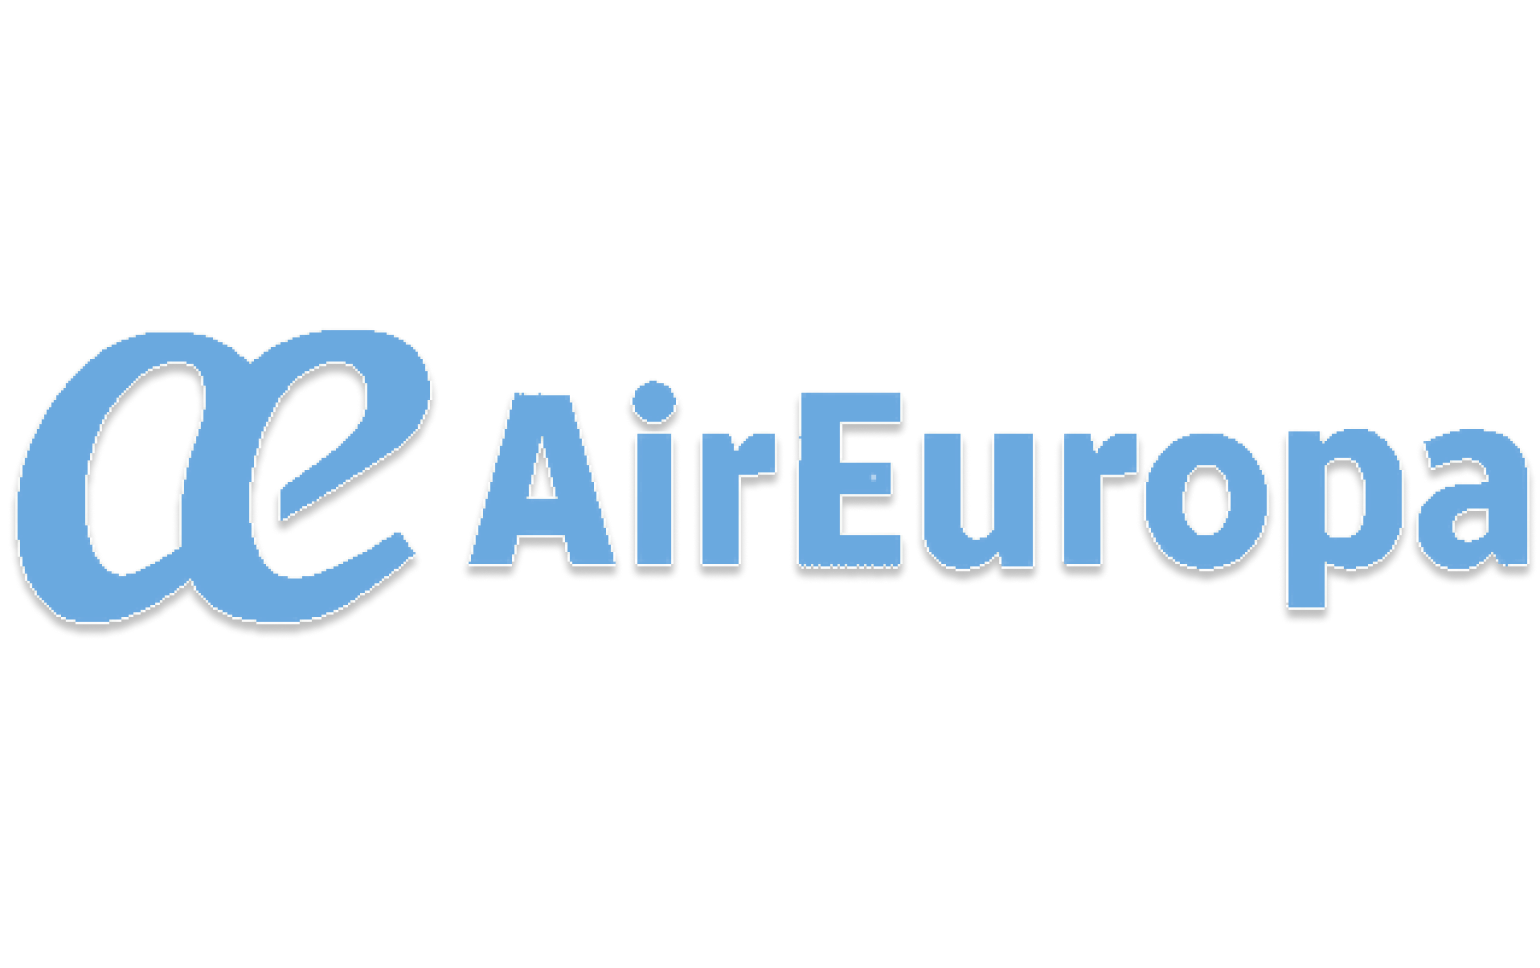 Air-Europa-logo-removebg-preview